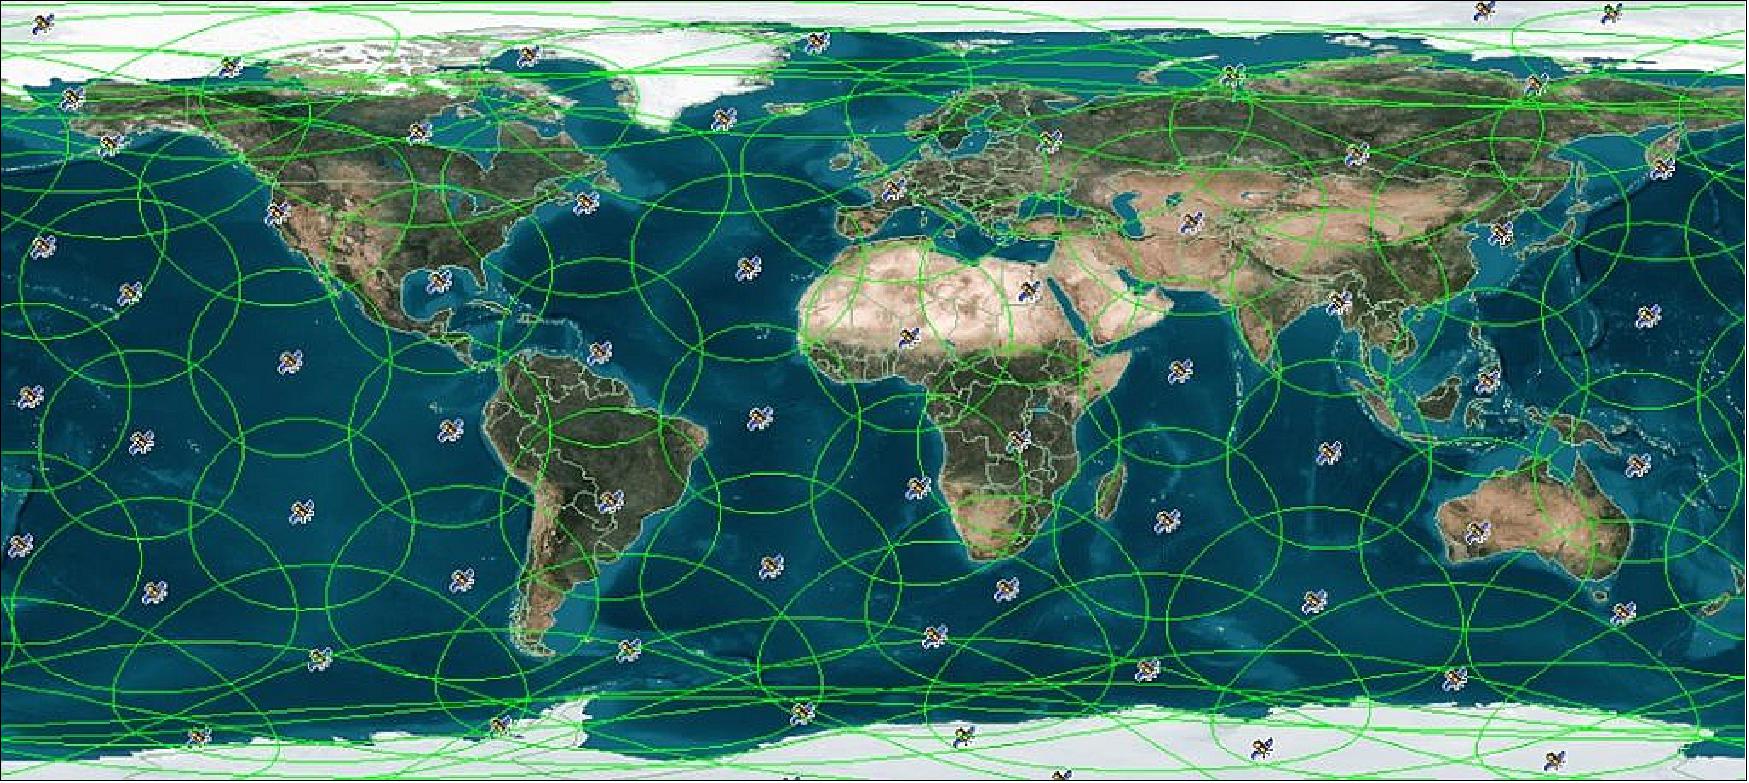 Figure 25: Iridium’s global coverage (image credit: Iridium/NASA)